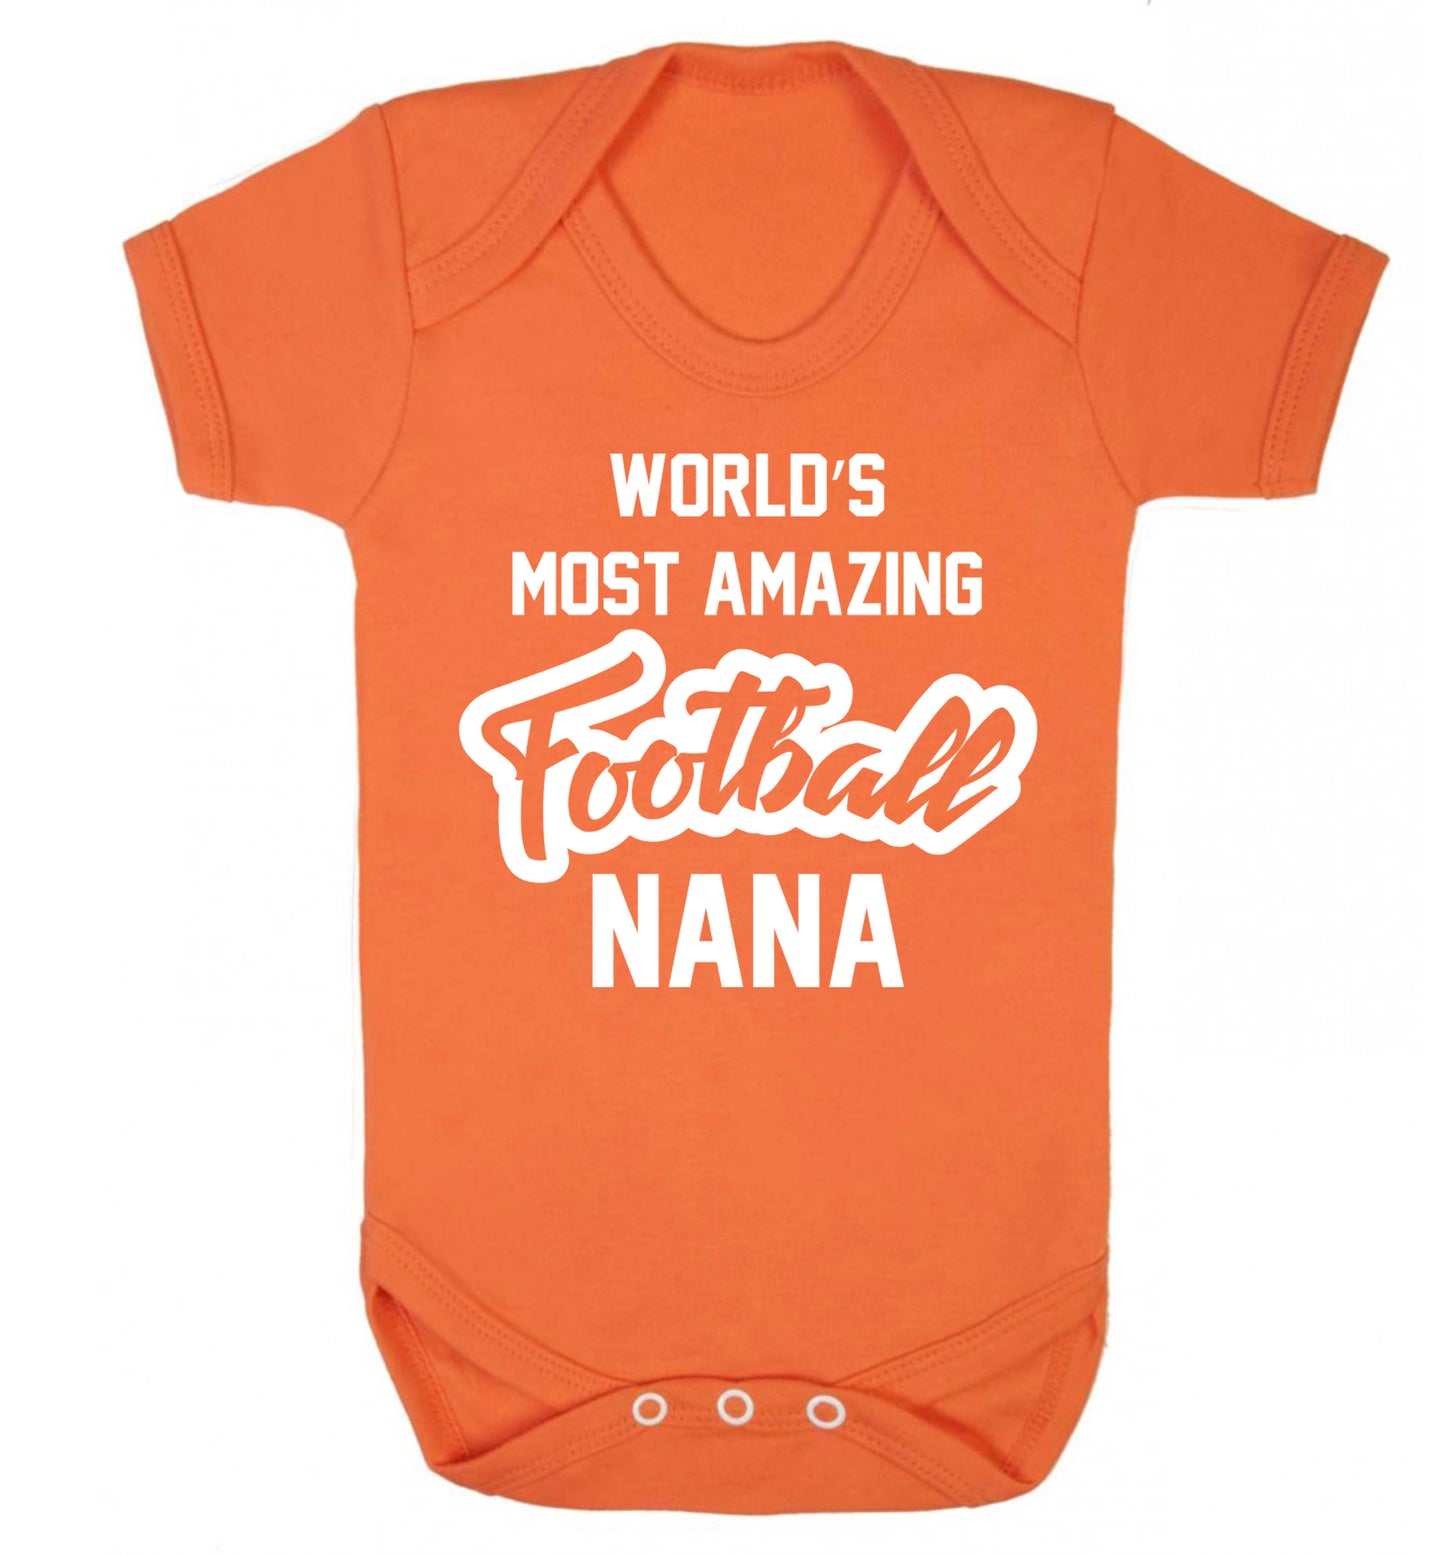 Worlds most amazing football nana Baby Vest orange 18-24 months